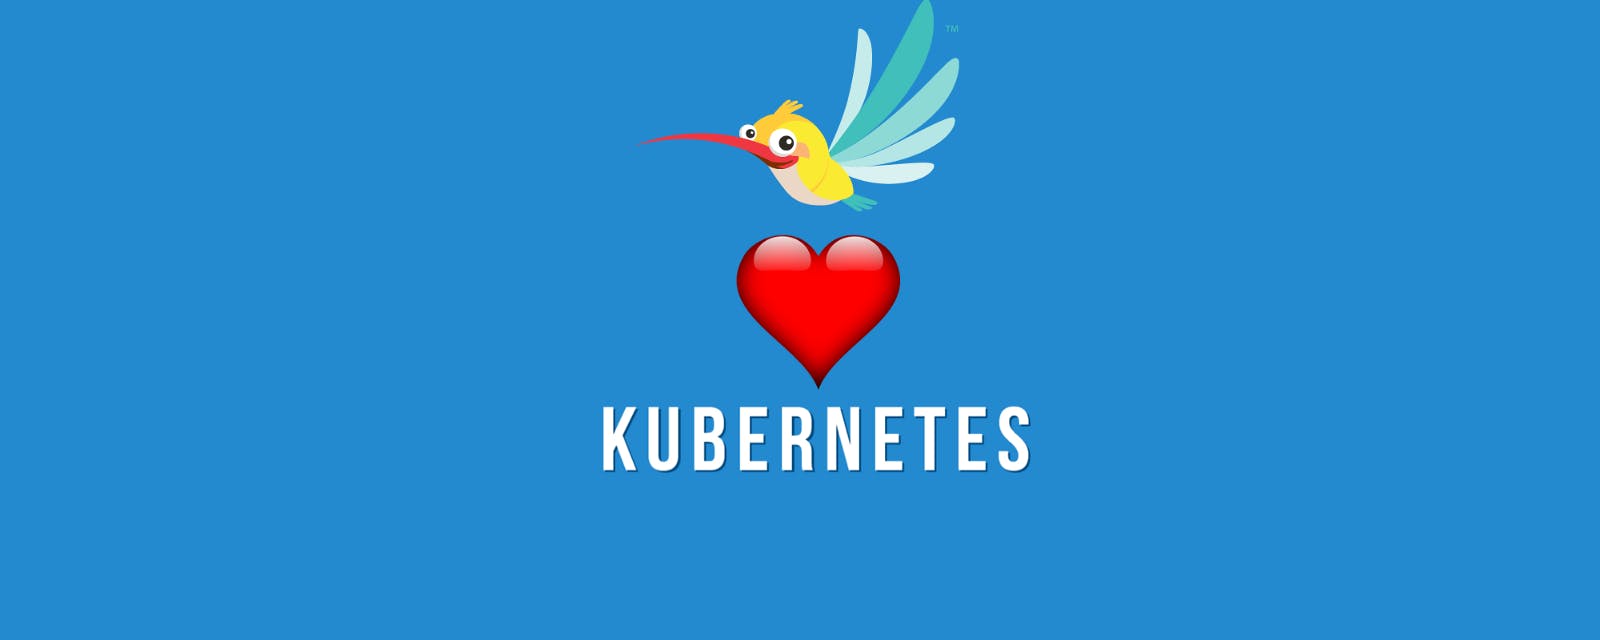 featured image - Deploying Flogo apps to Kubernetes